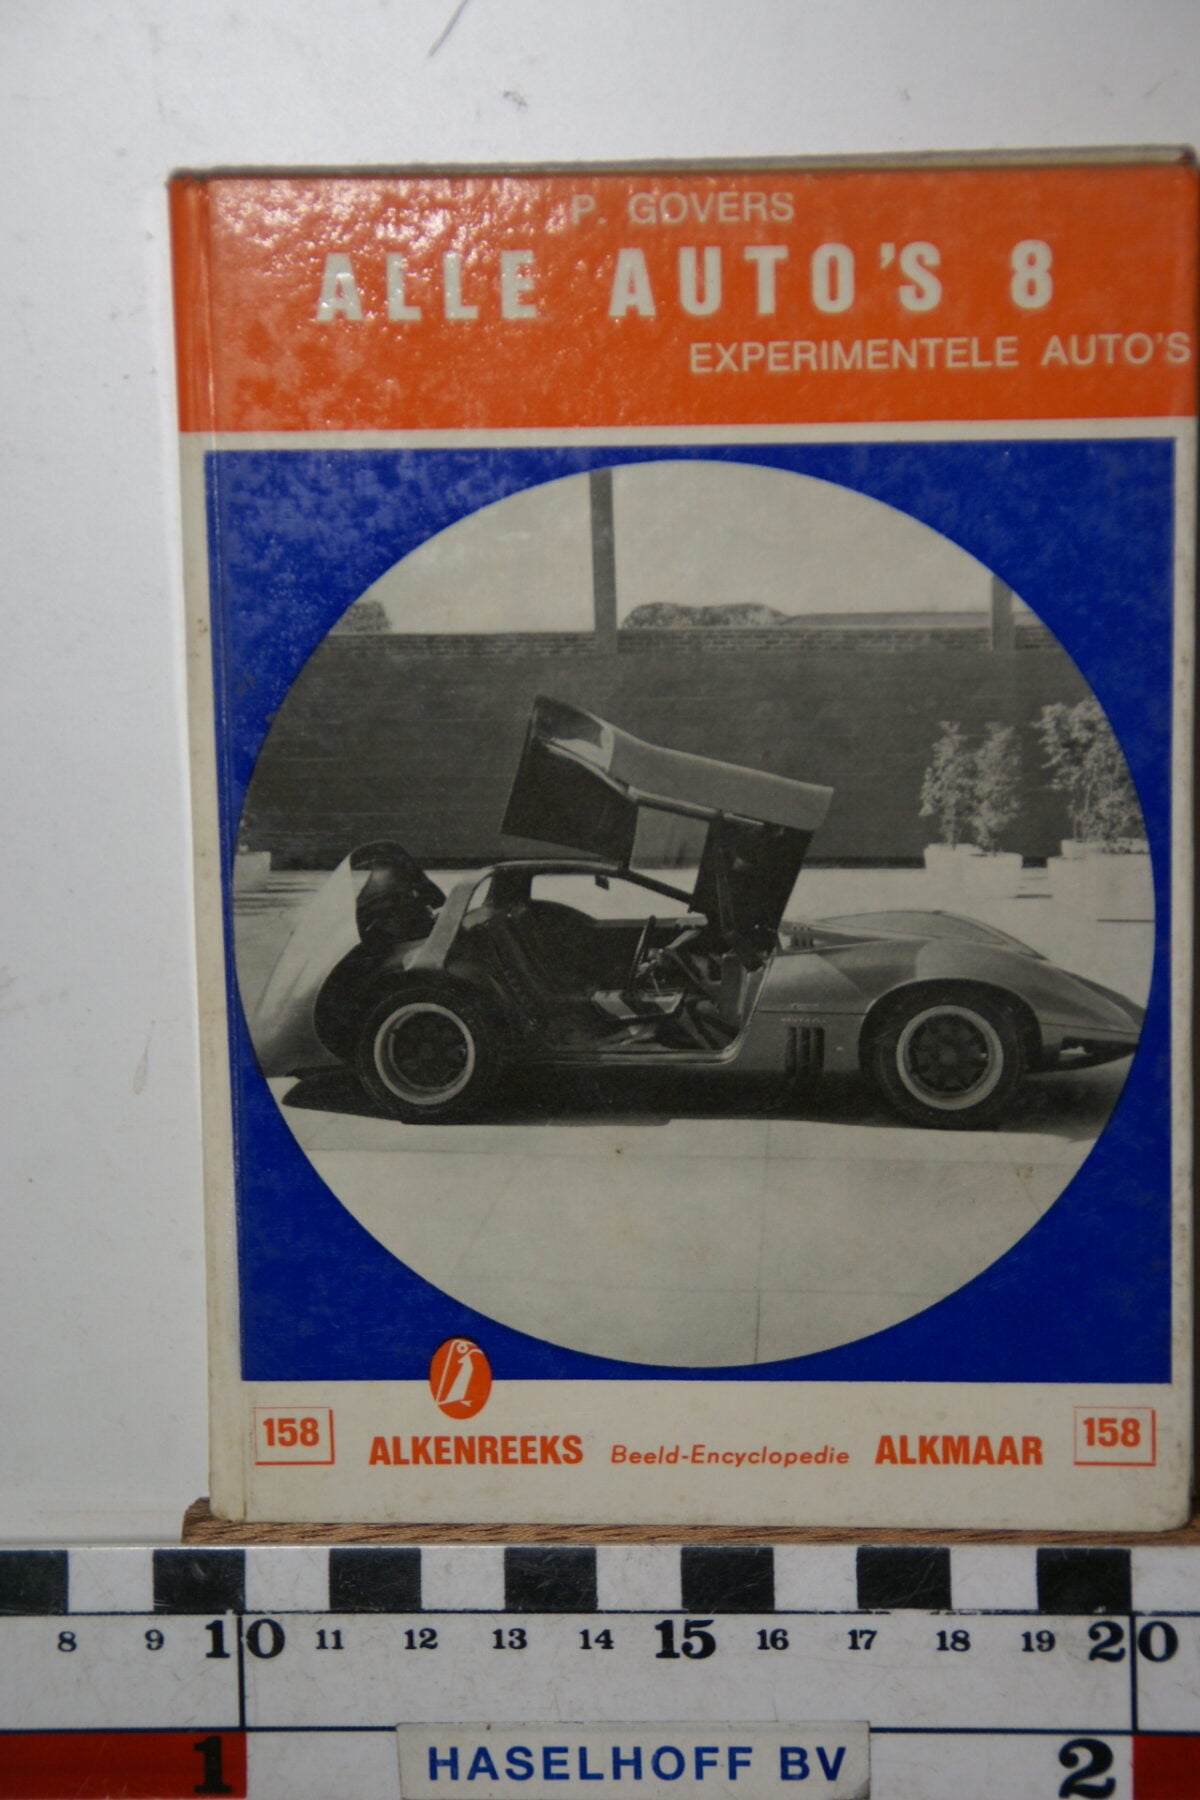 DSC02852 60er jaren boek Alkenreeks alle auto's 8 experimentele auto's nr 158-cc6b2bae